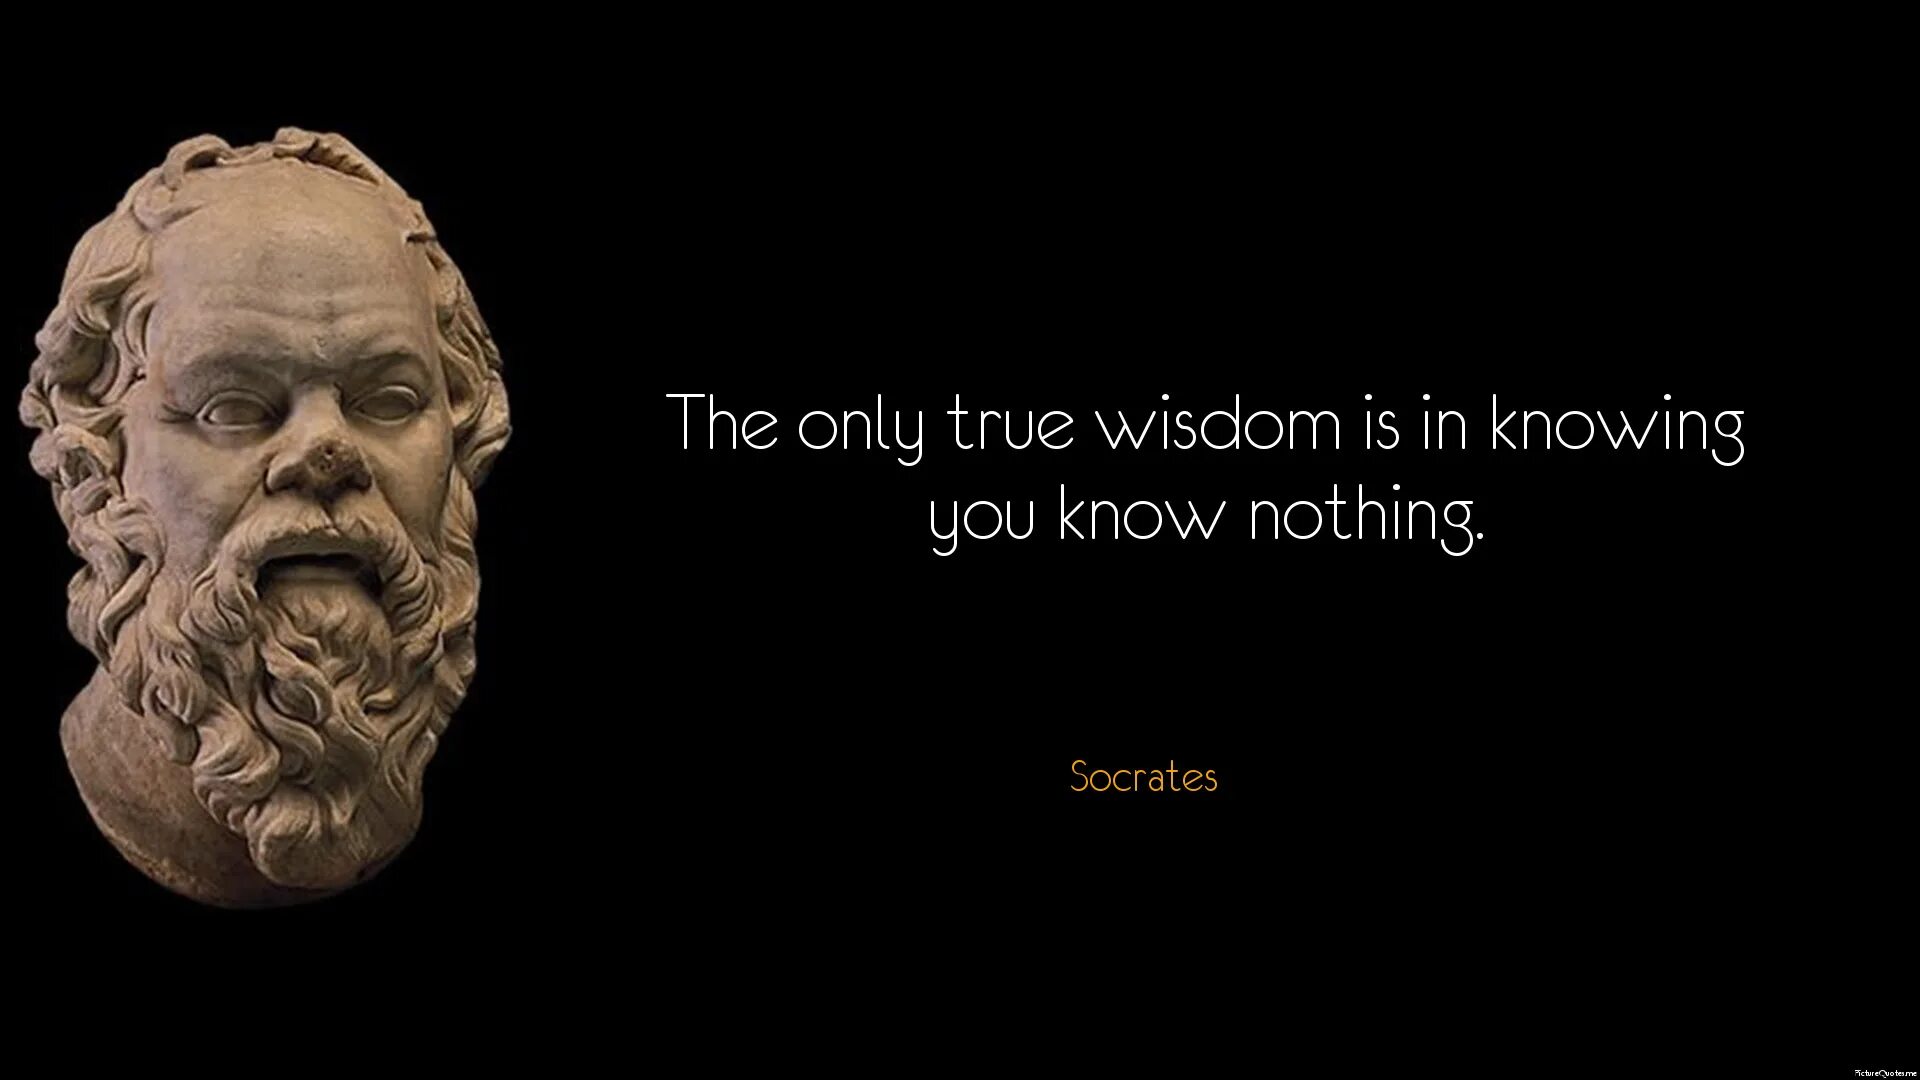 Wisdom перевод на русский. Сократ. Высказывания Сократа. Сократ цитаты. Мудрость Сократа.